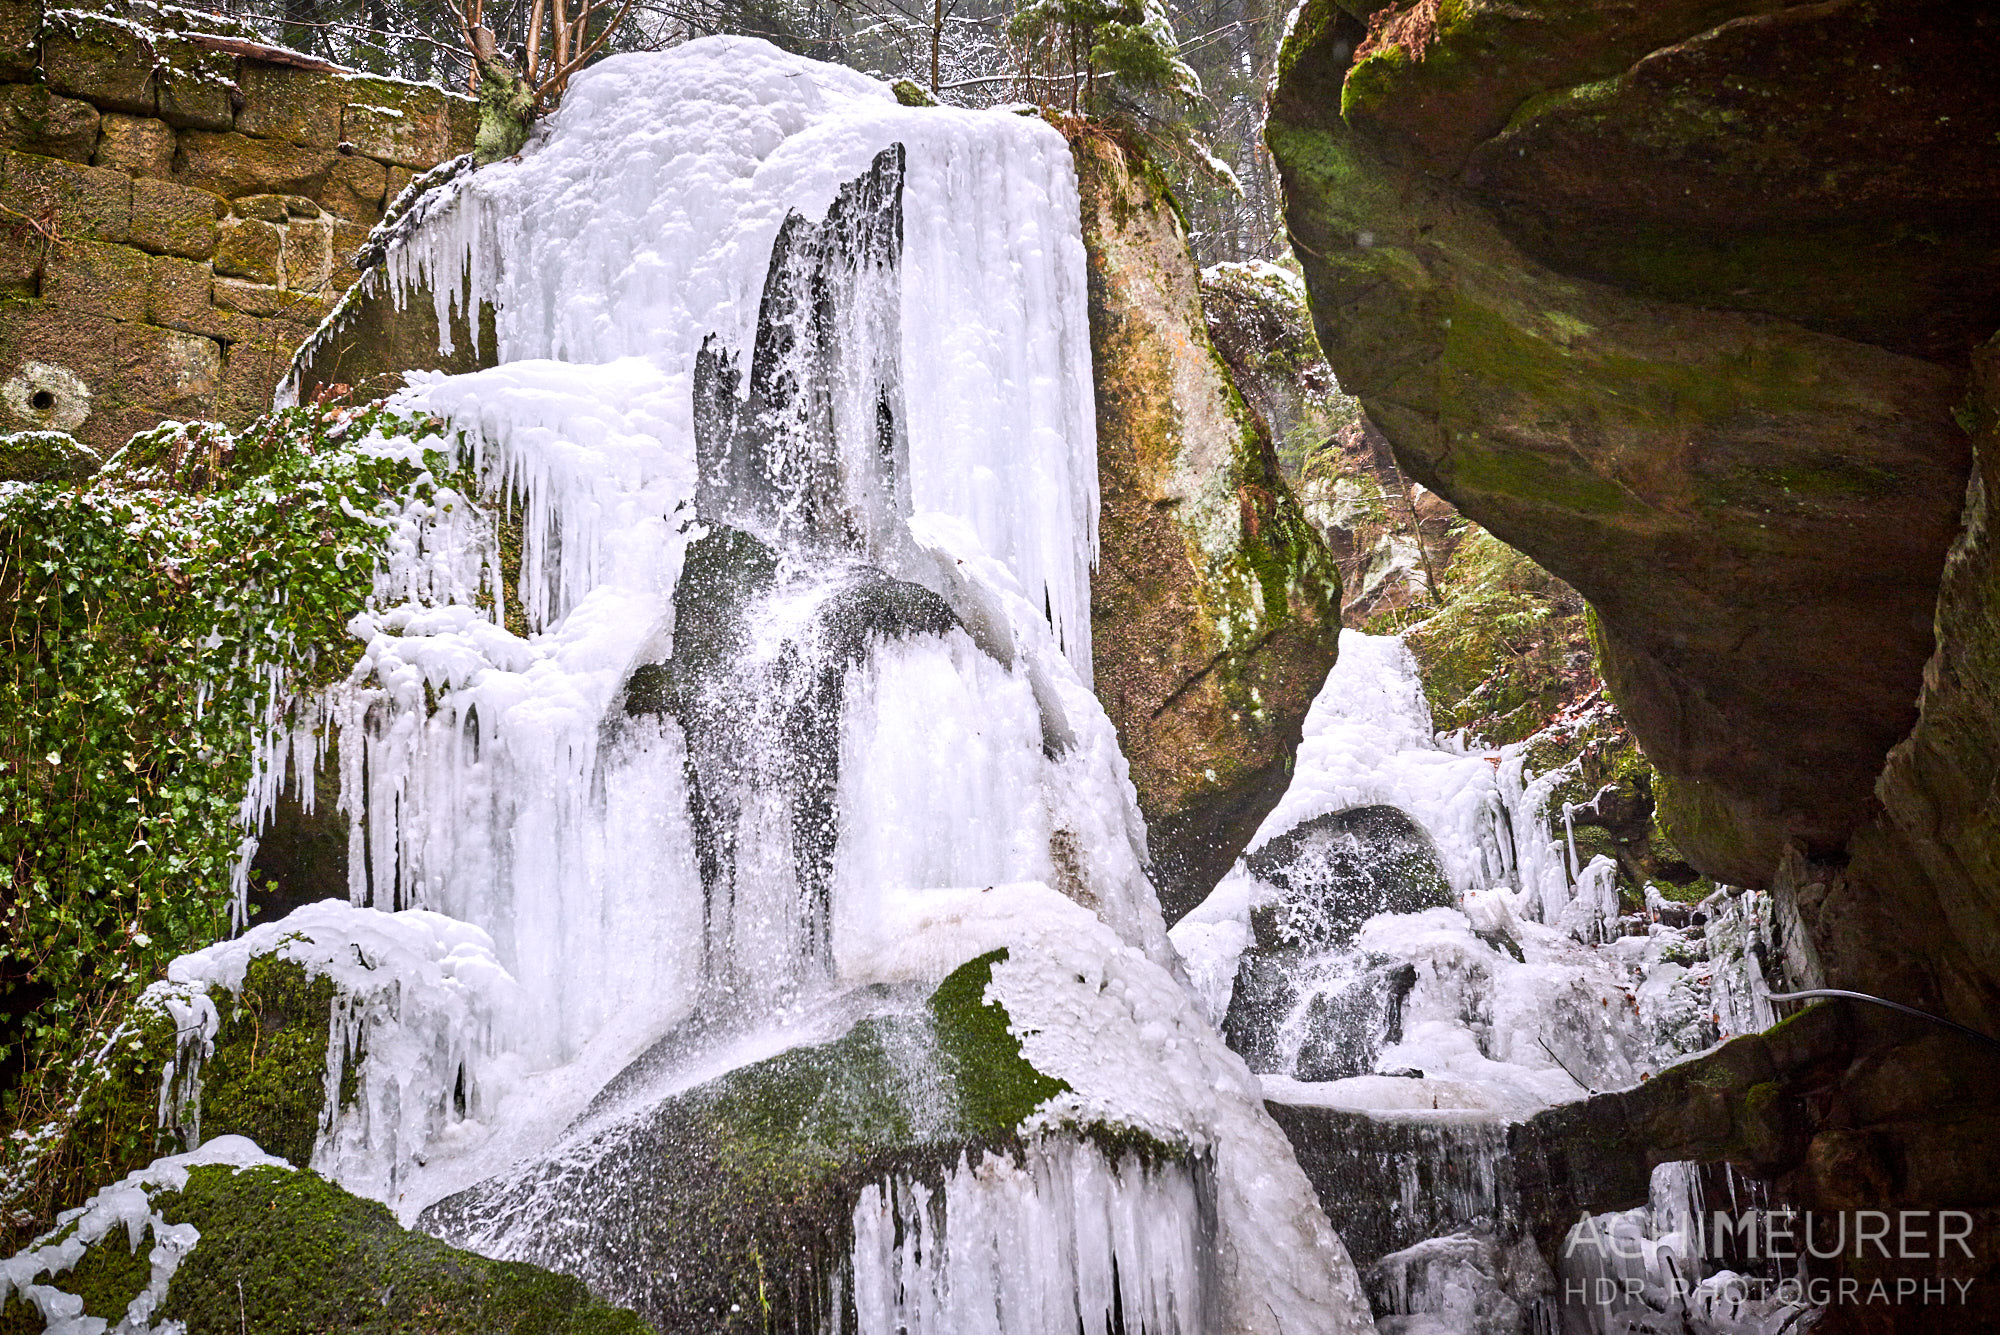 Der gefrorene Lichtenhainer Wasserfall im Kirnitzschtal, Sächsische Schweiz by AchimMeurer.com. 